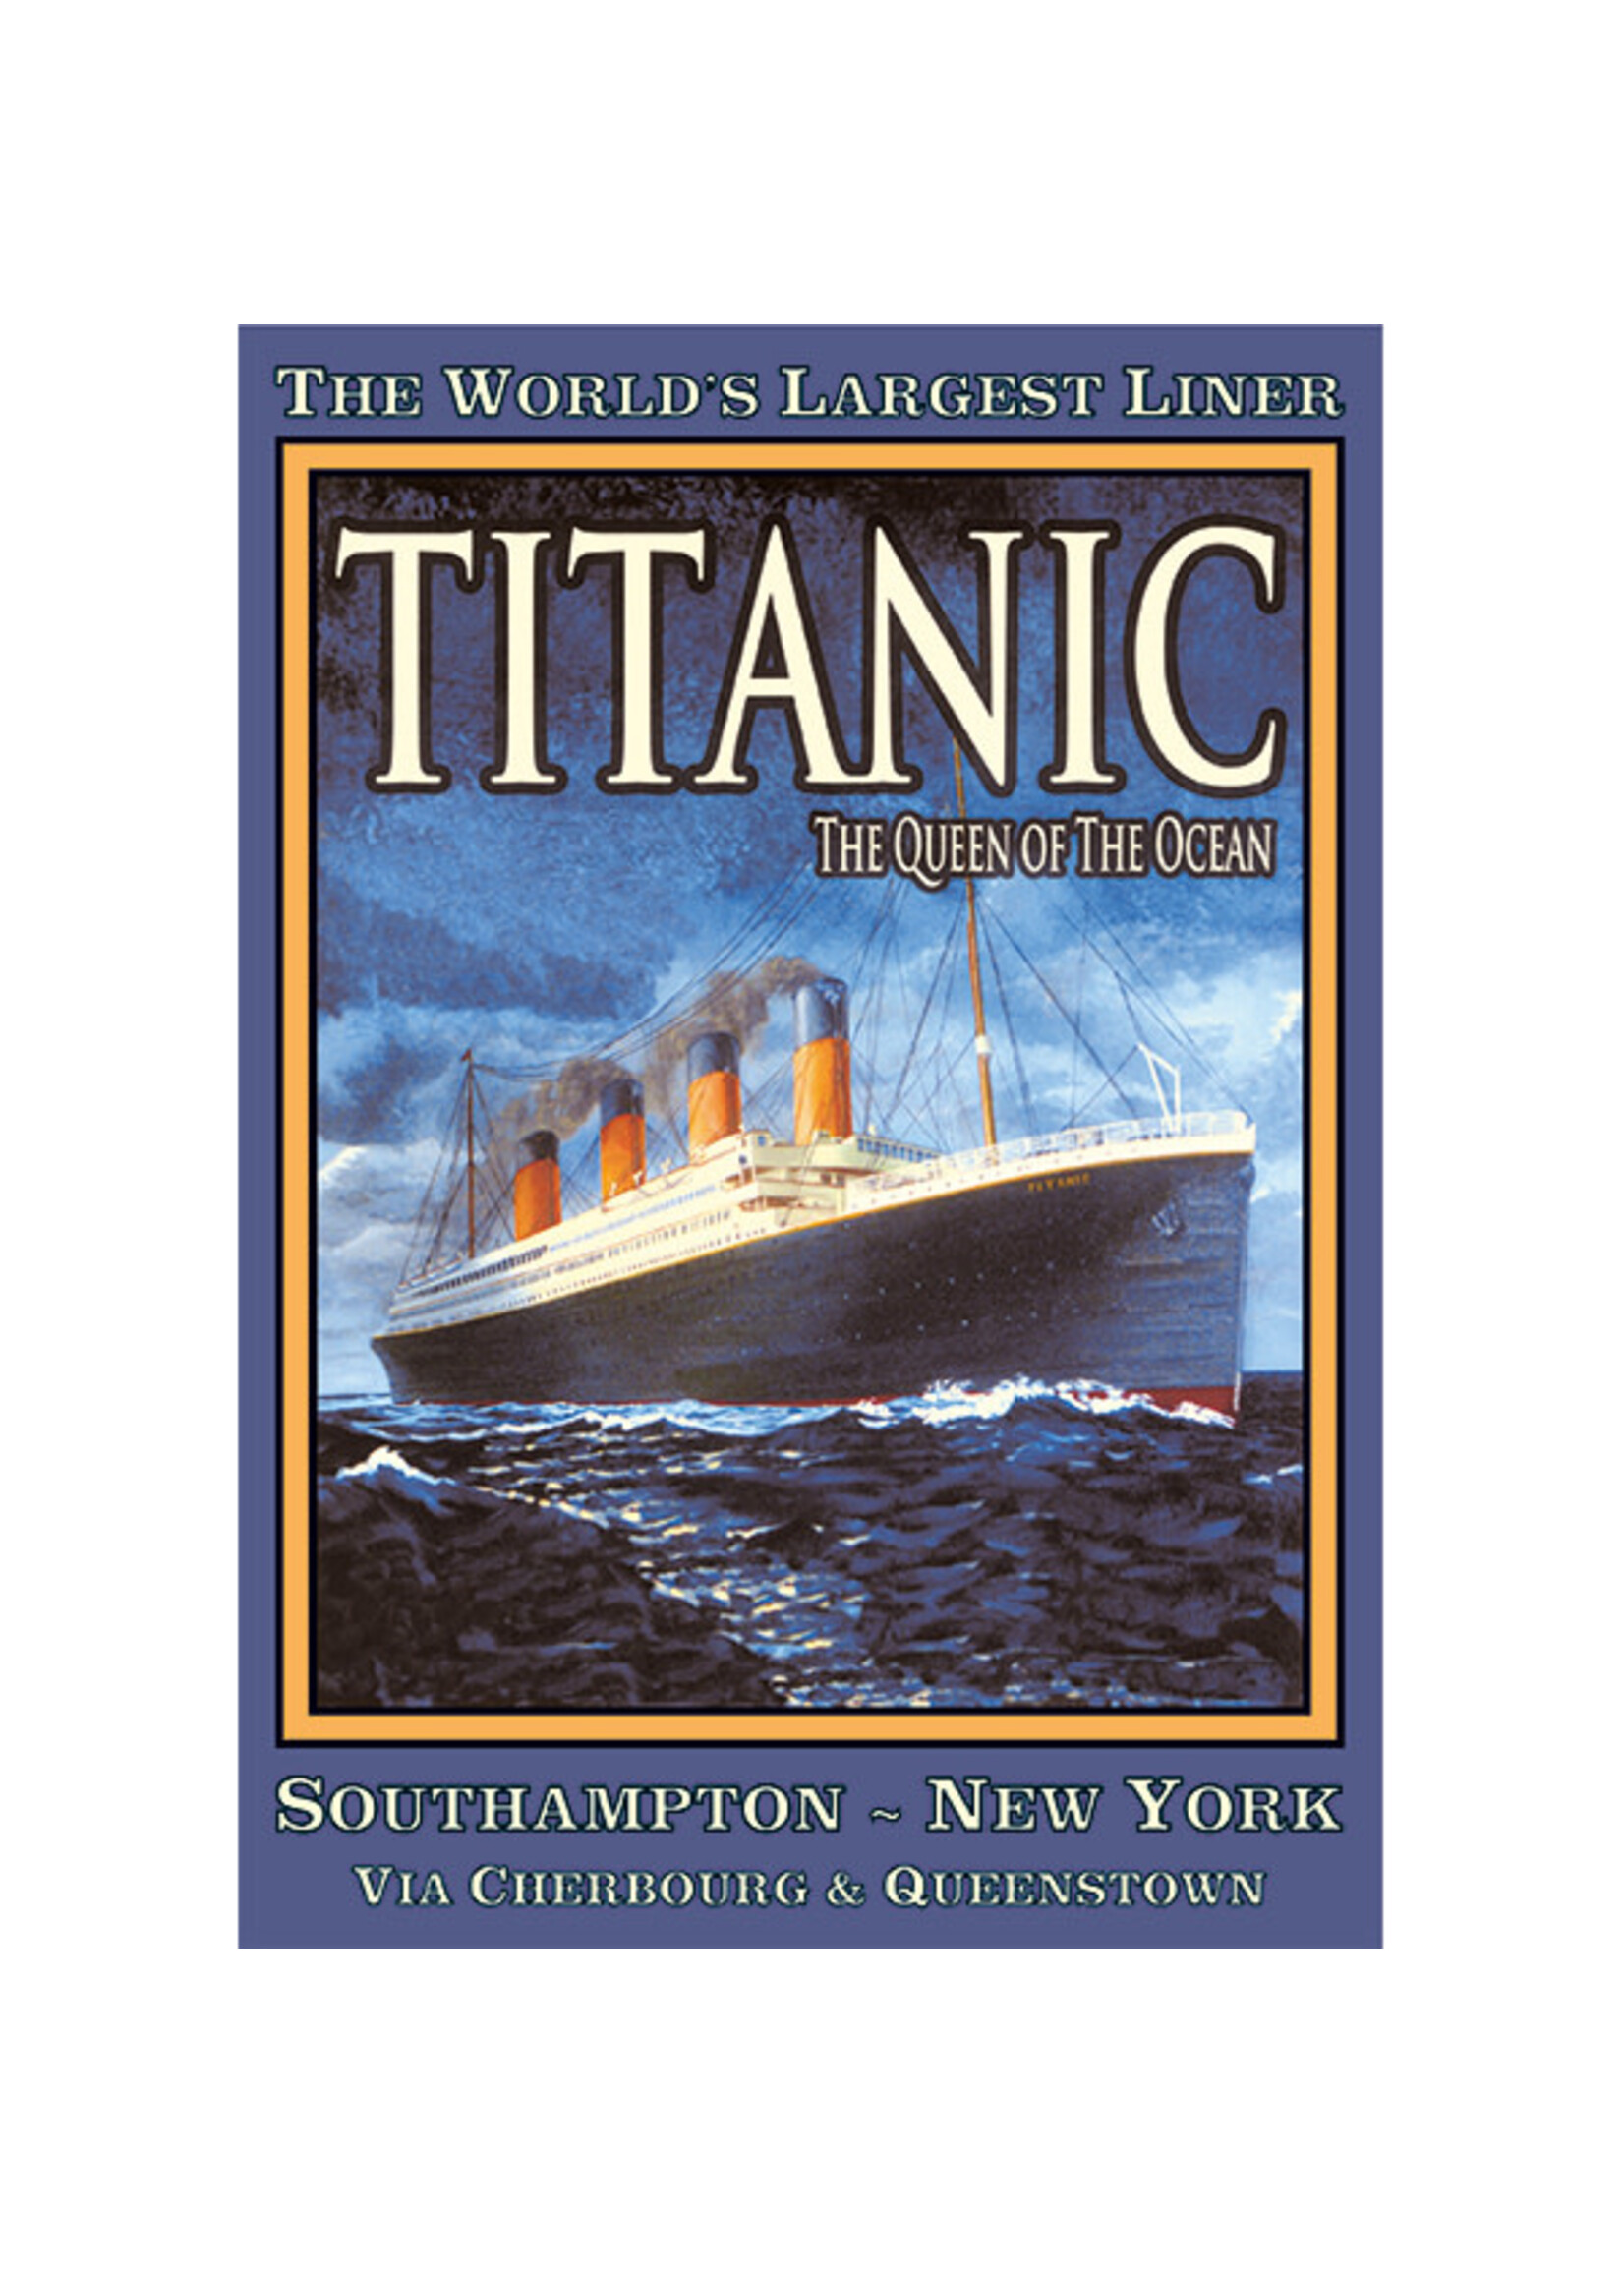 Piatnik Titanic 1000